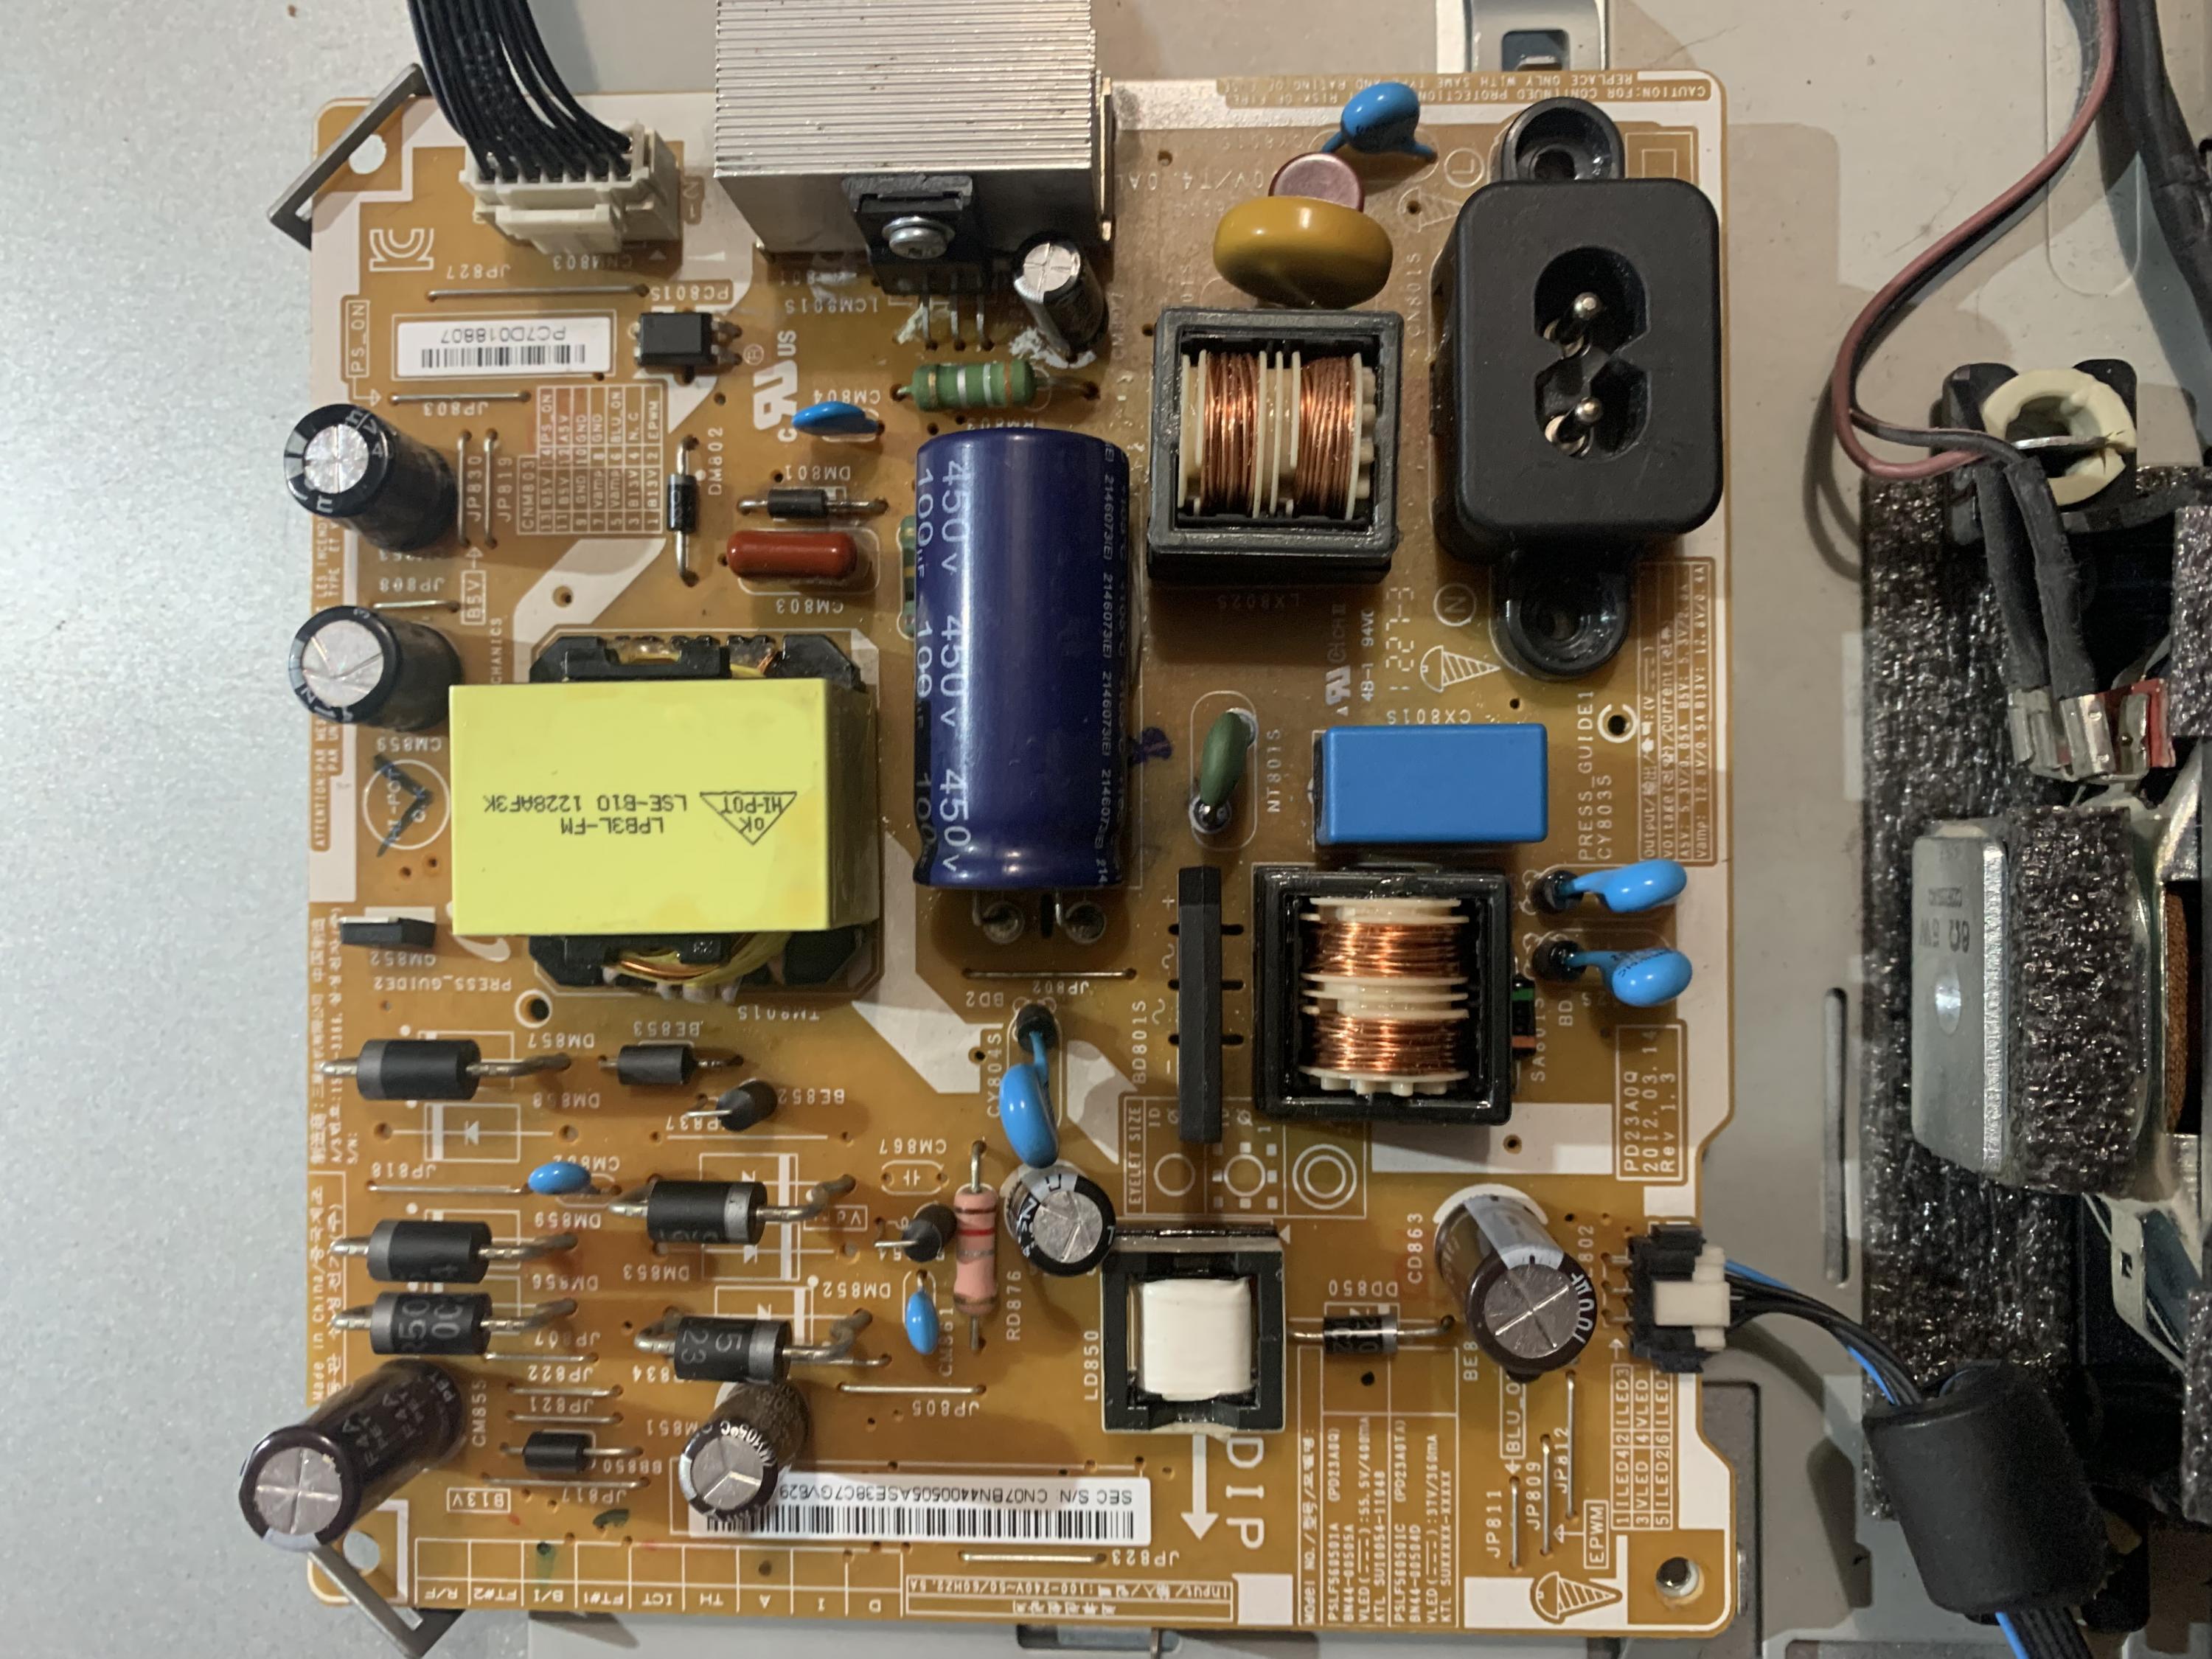 Samsung T22b300 power supply problem - Badcaps